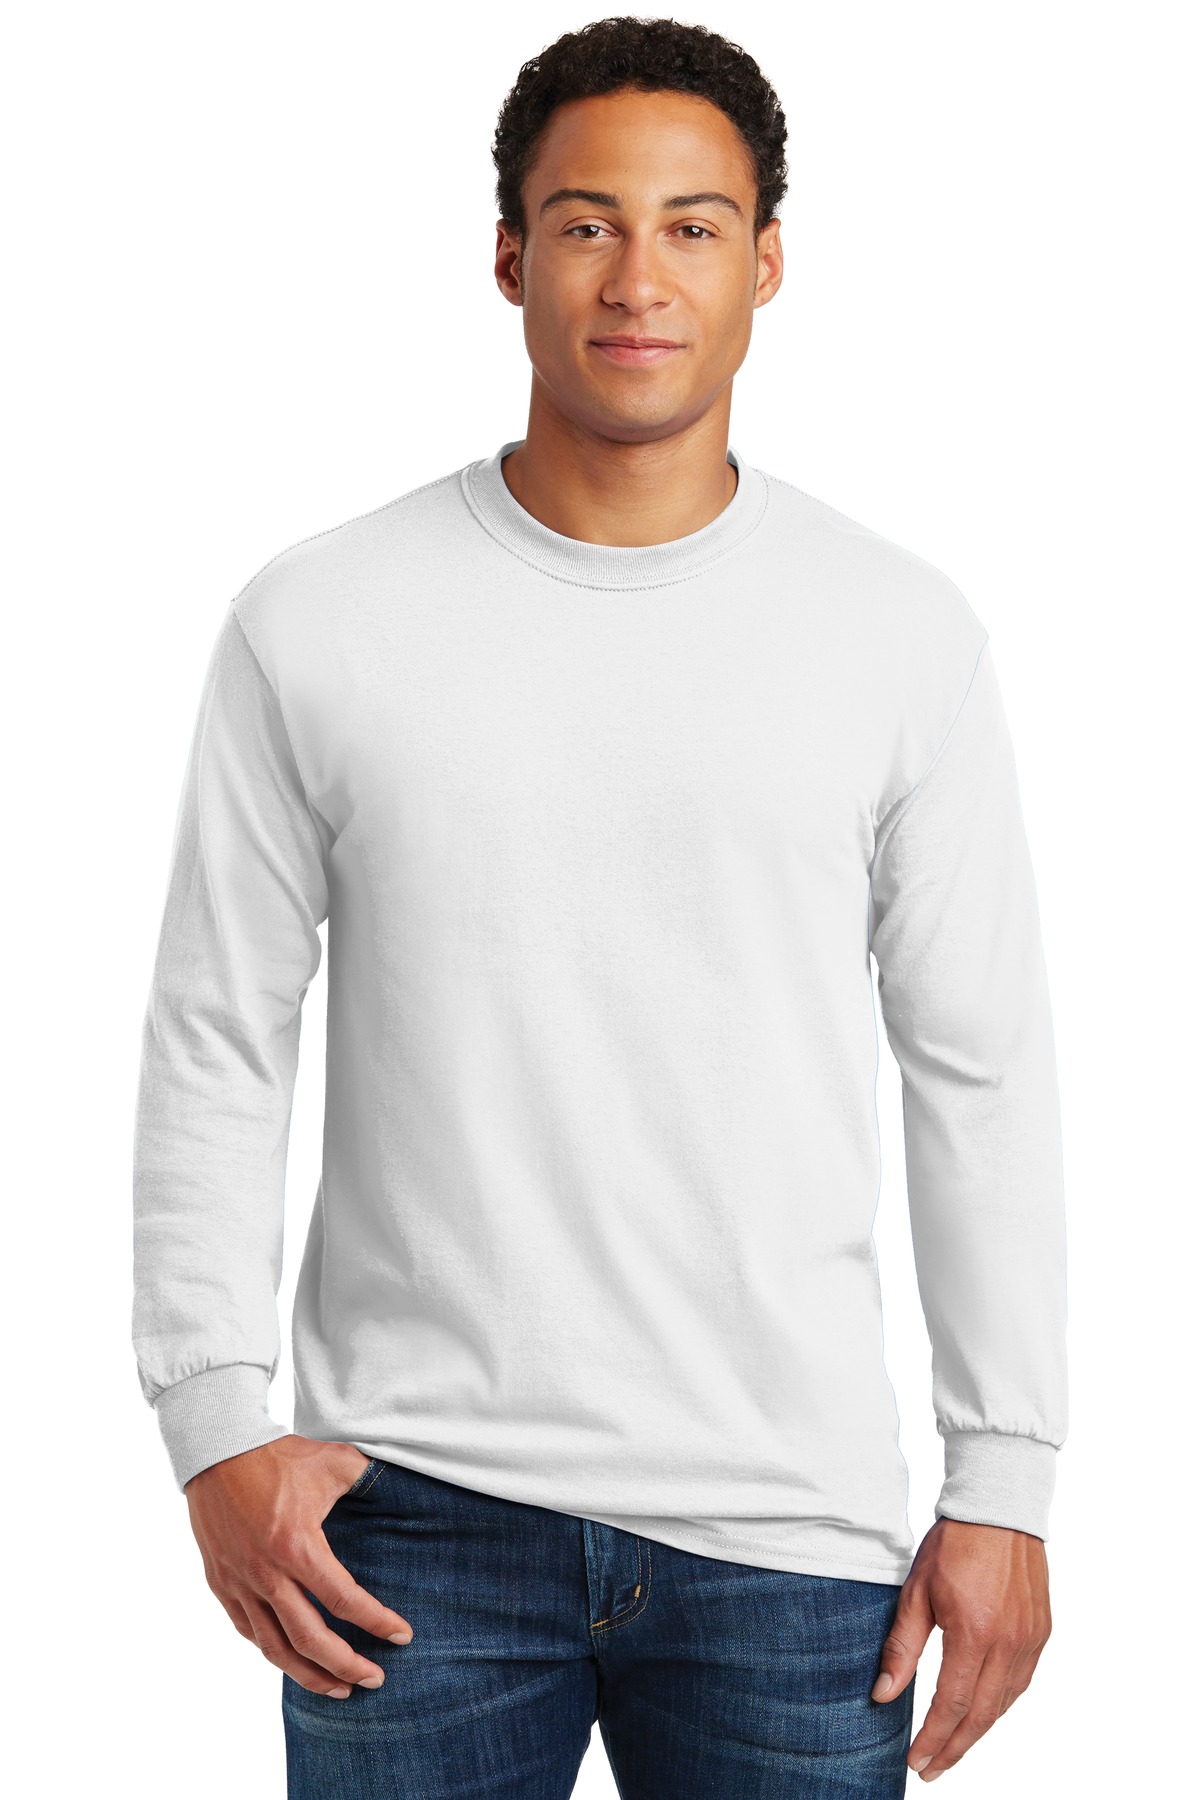 Buy Gildan - Heavy Cotton 100% Cotton Long Sleeve T-Shirt - Gildan ...